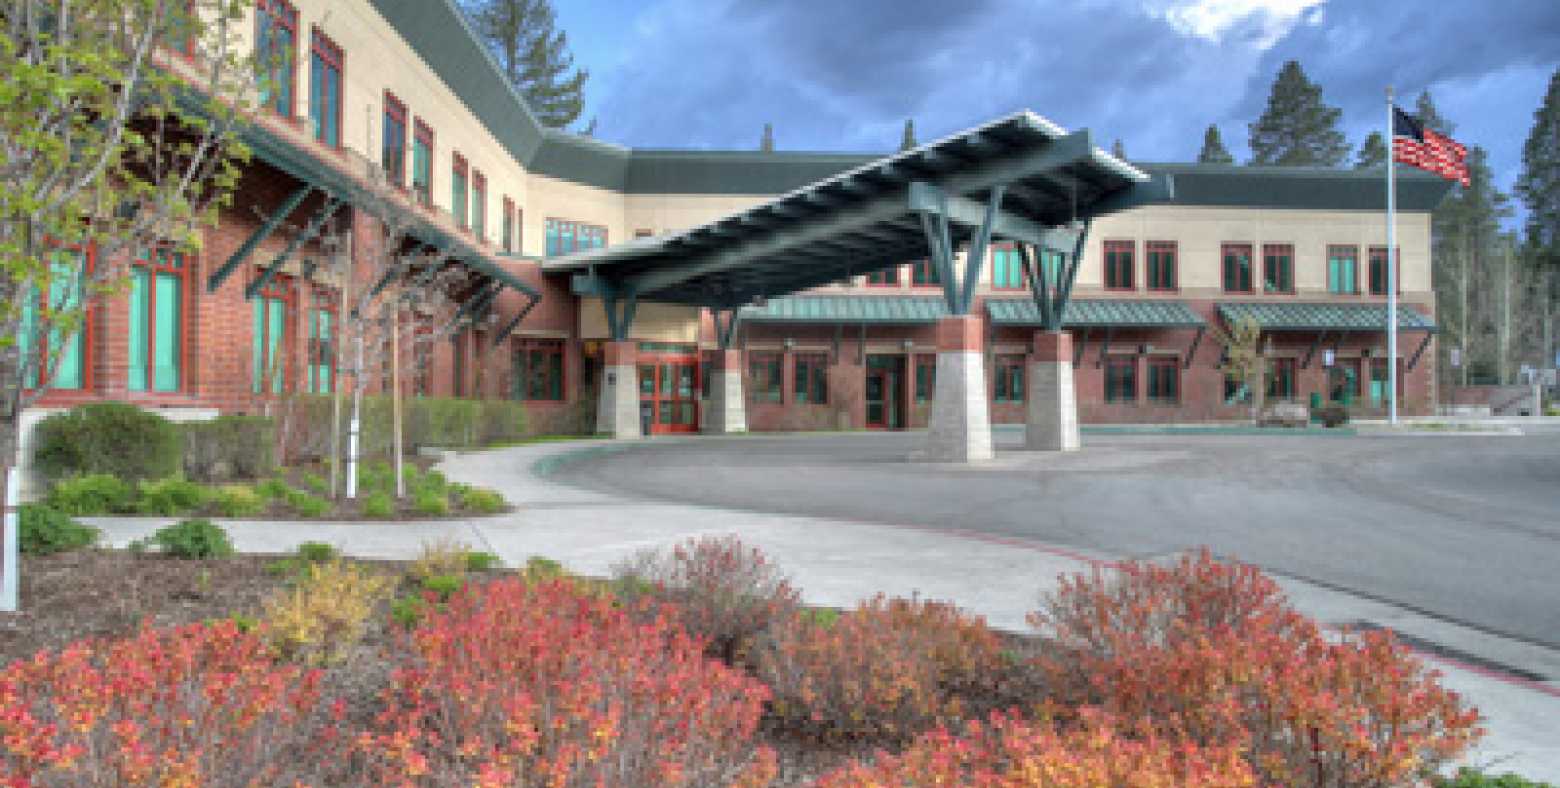 Tahoe Forest Hospital exterior entrance